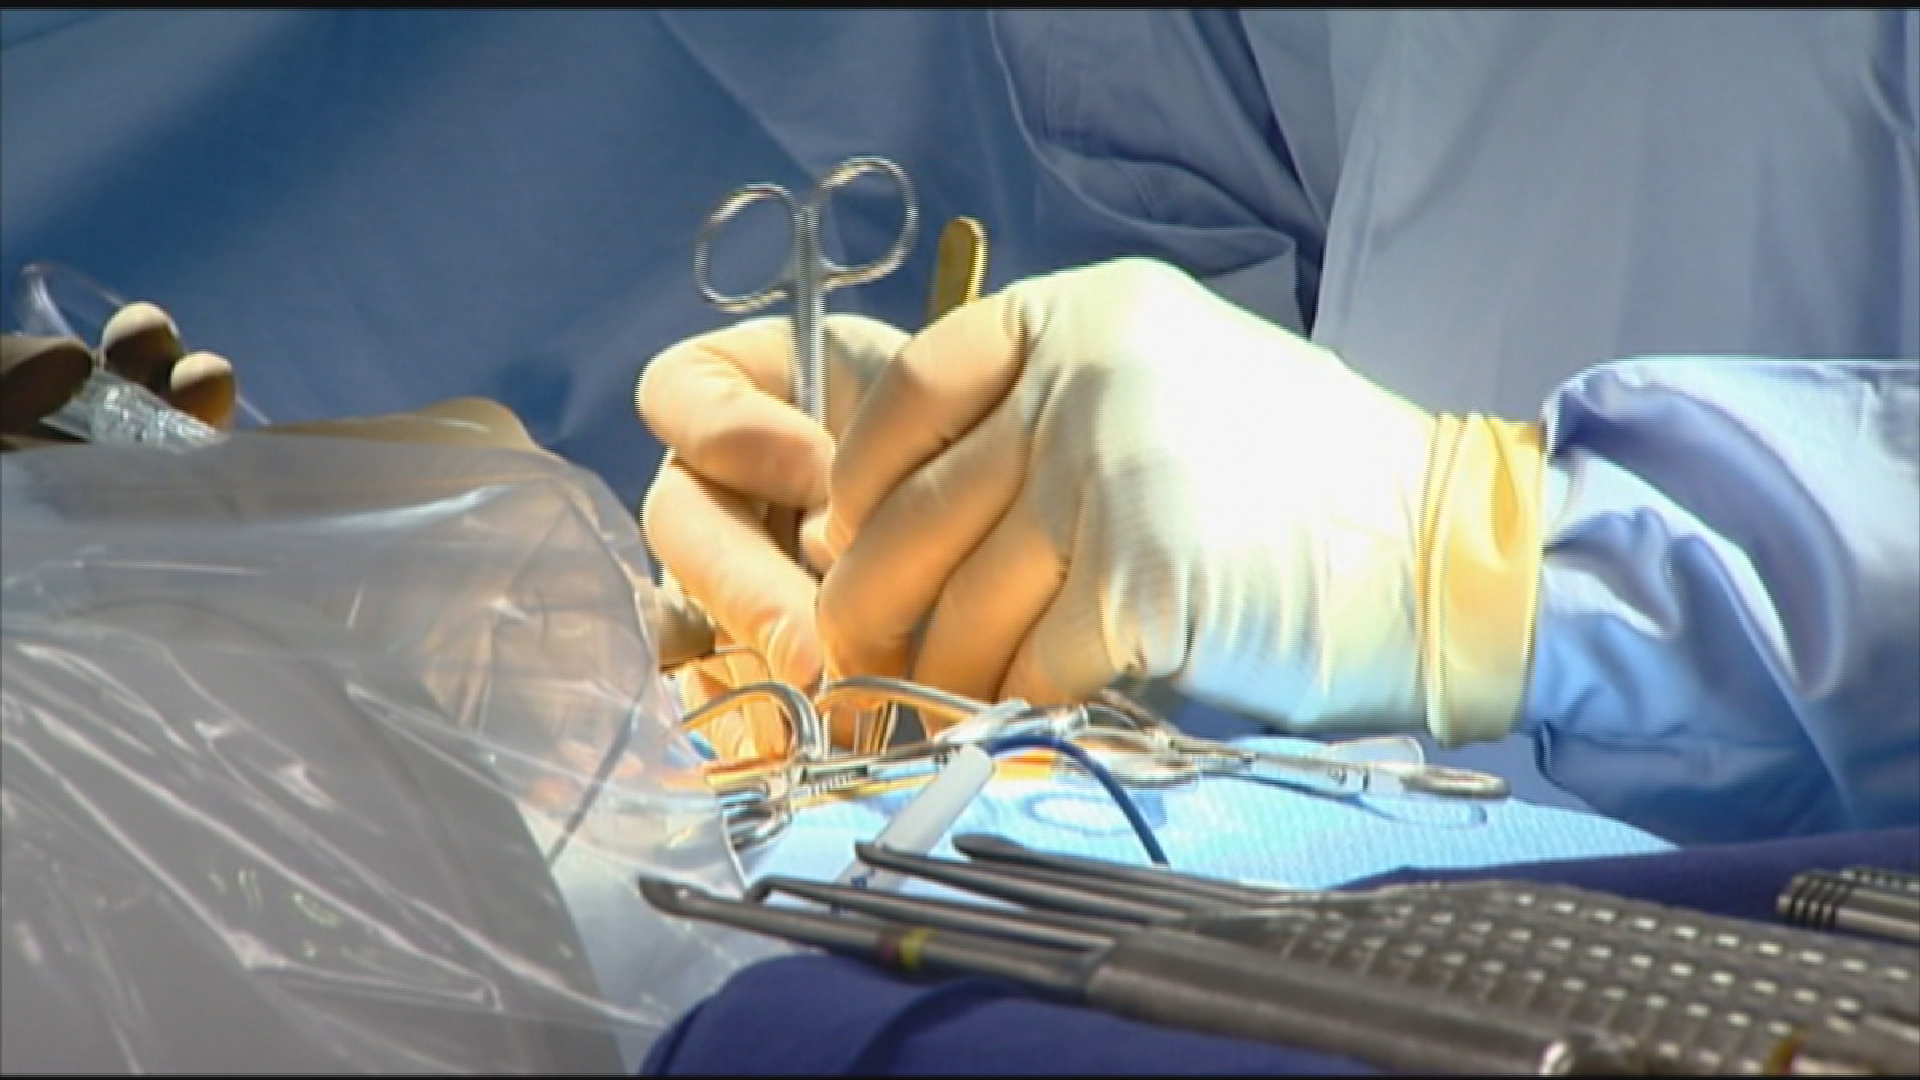 Surgical Tech Background Checks Drug Tests Bill Moves Forward Cbs Denver